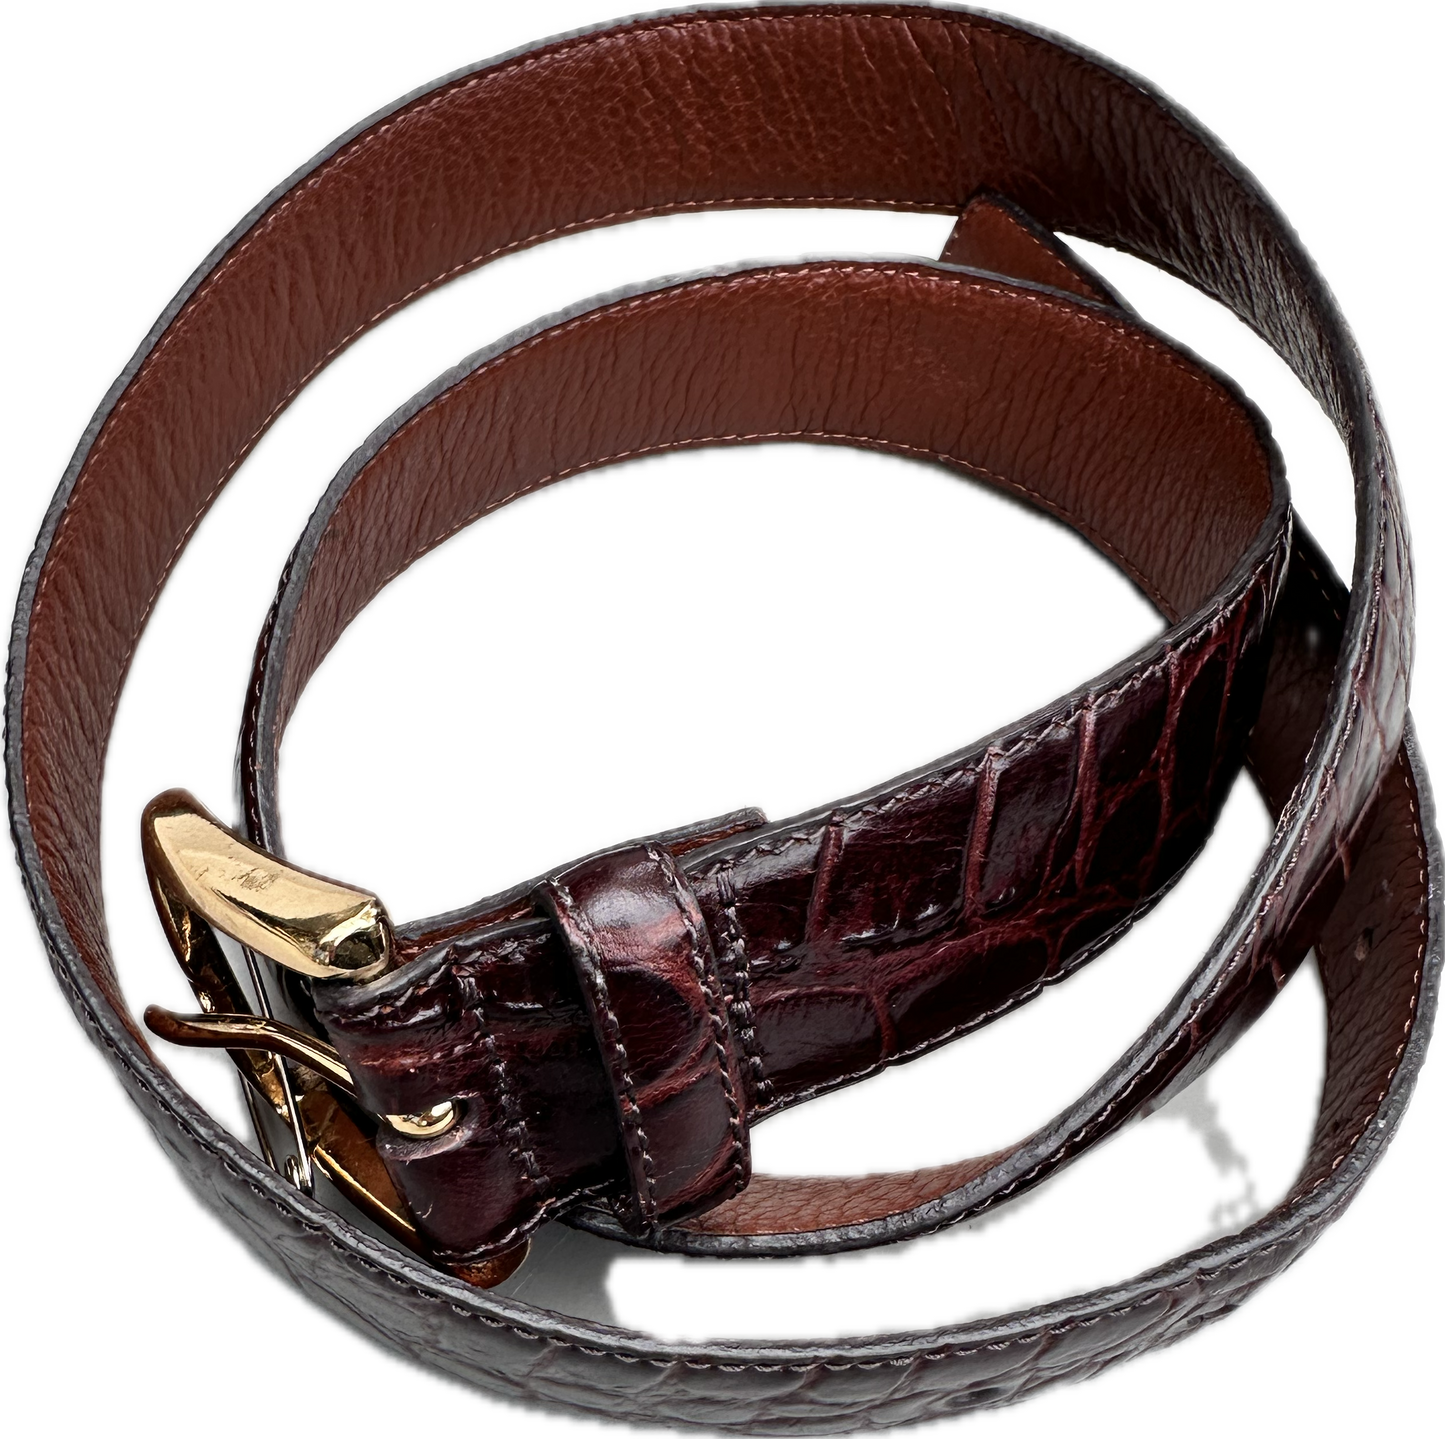 THE GENTLEMEN: Michael’s Fold Buckle Brown Leather Belt (36)